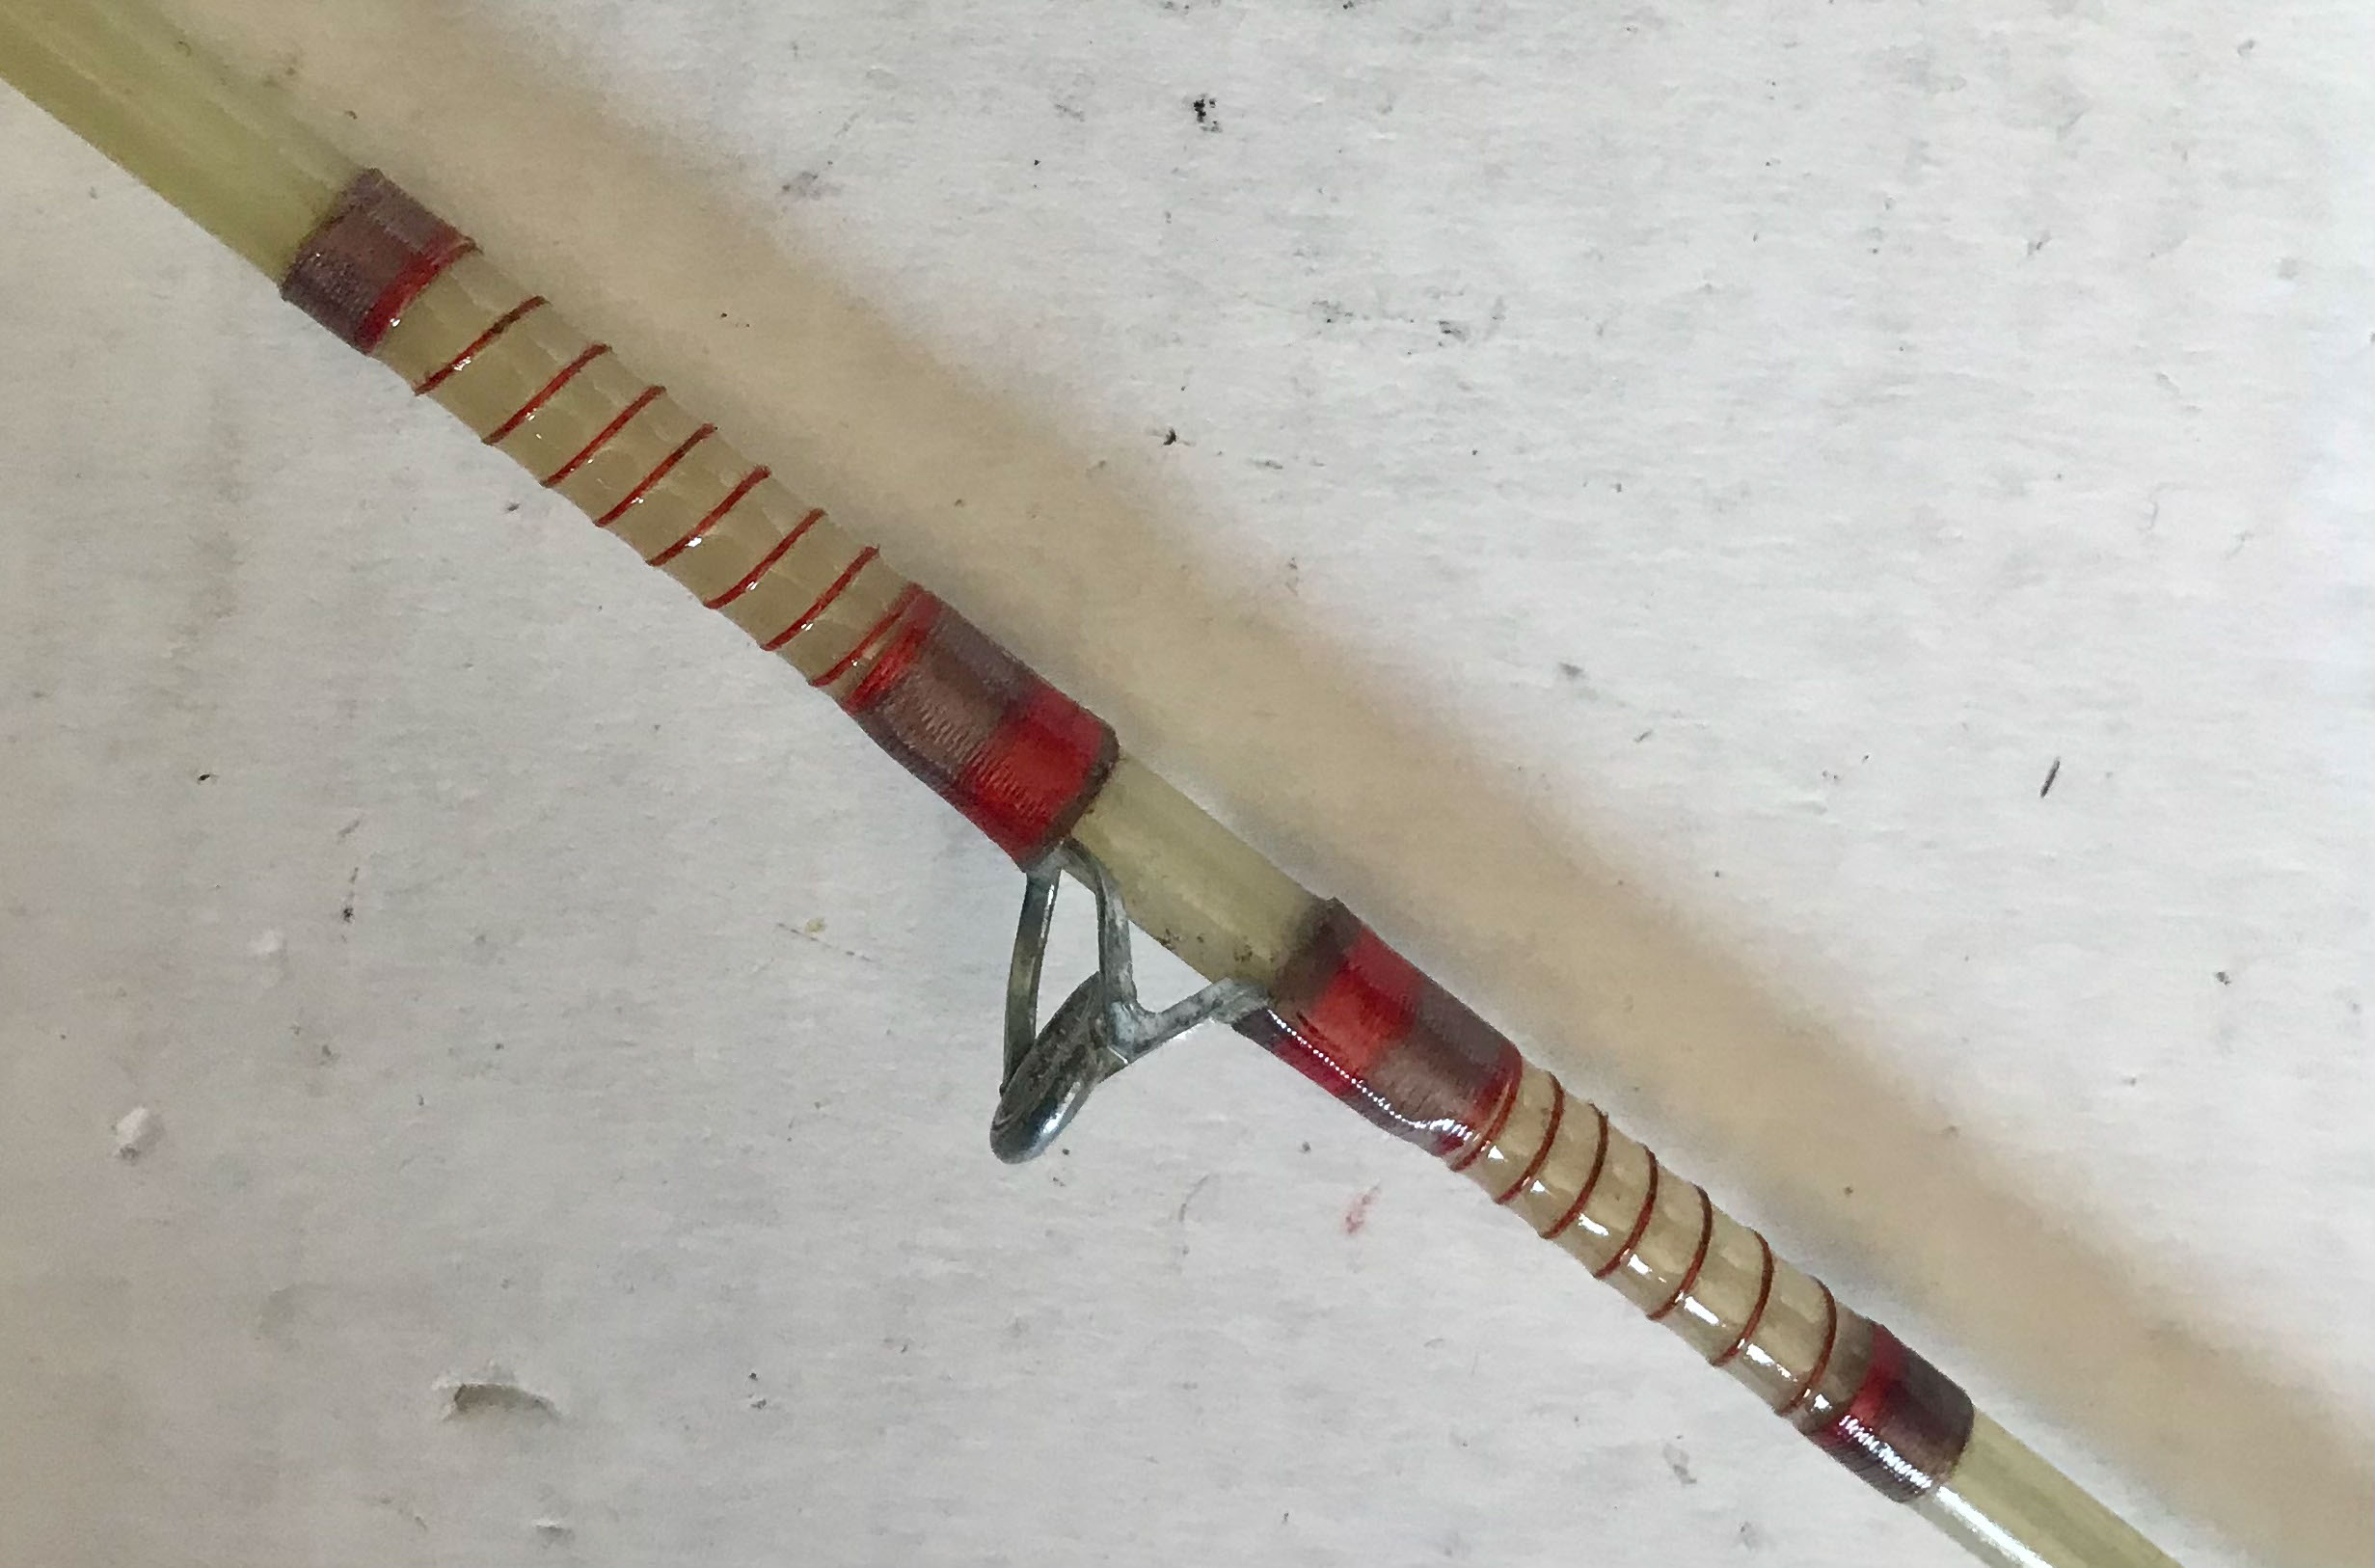 Late production Gentlemen's Streamliner rod/reel